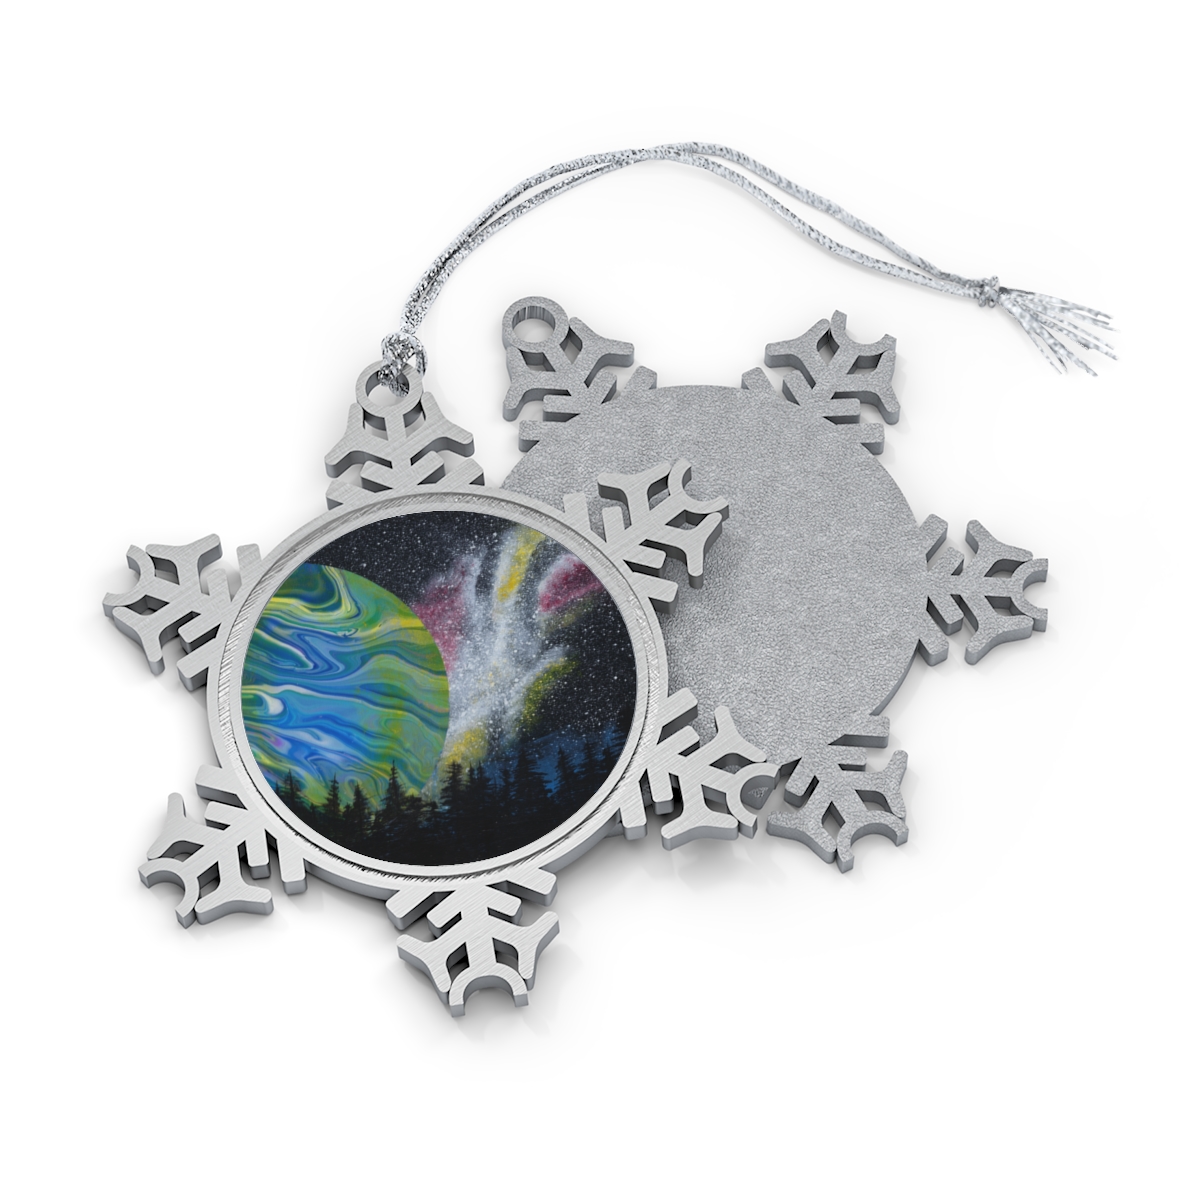 Pewter Snowflake Ornament - Blue Giant